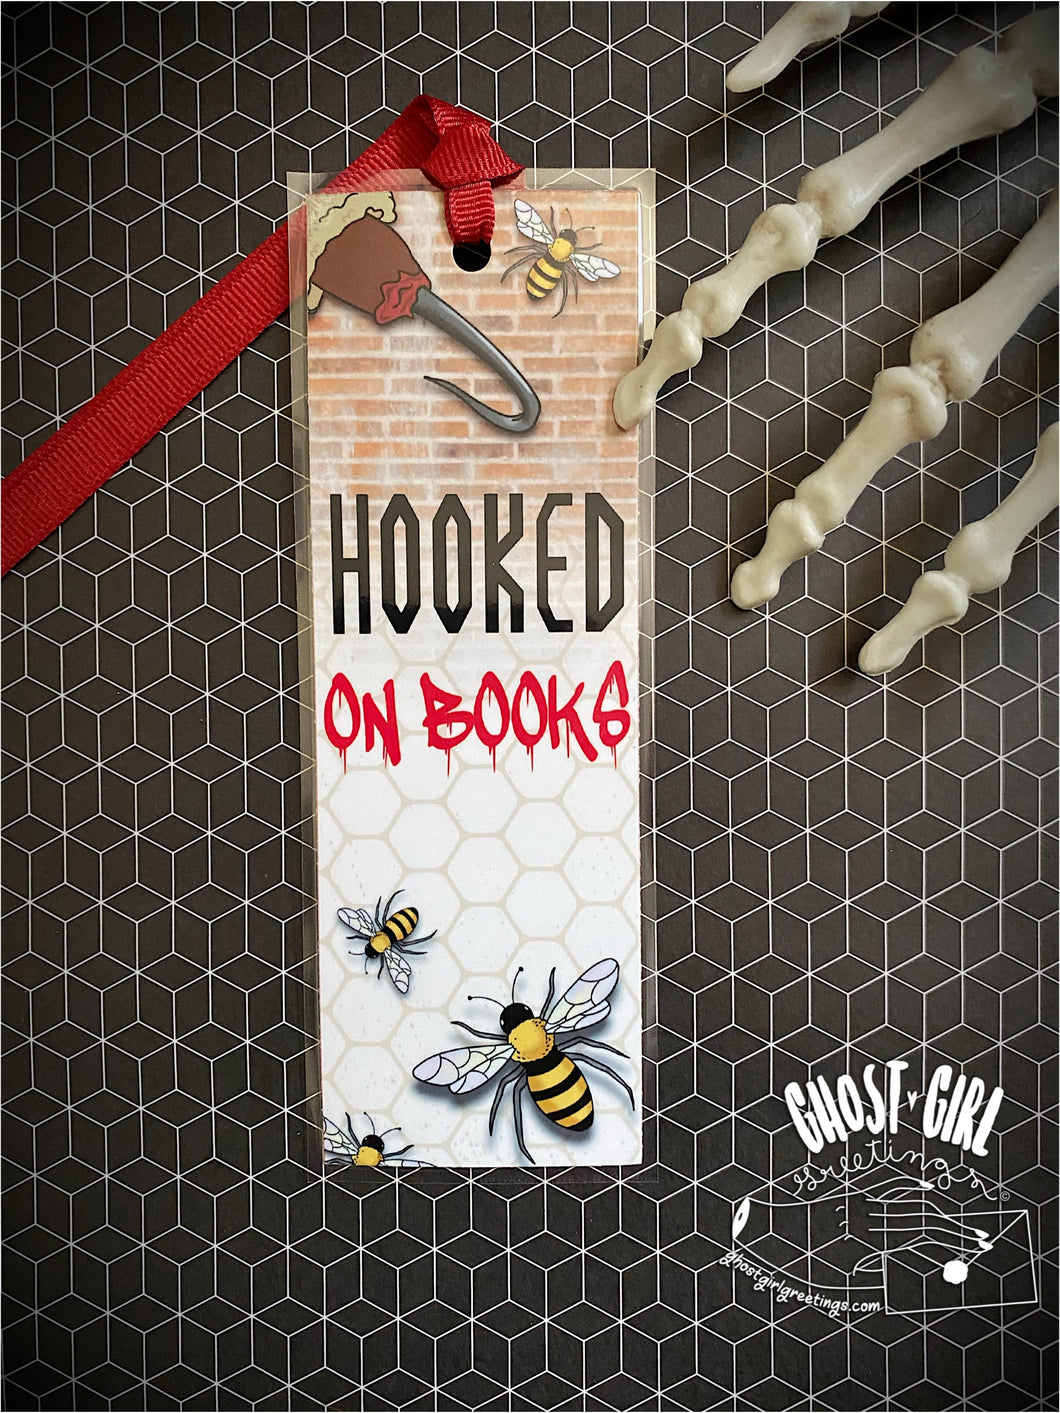 Hooked on books: Bookmark